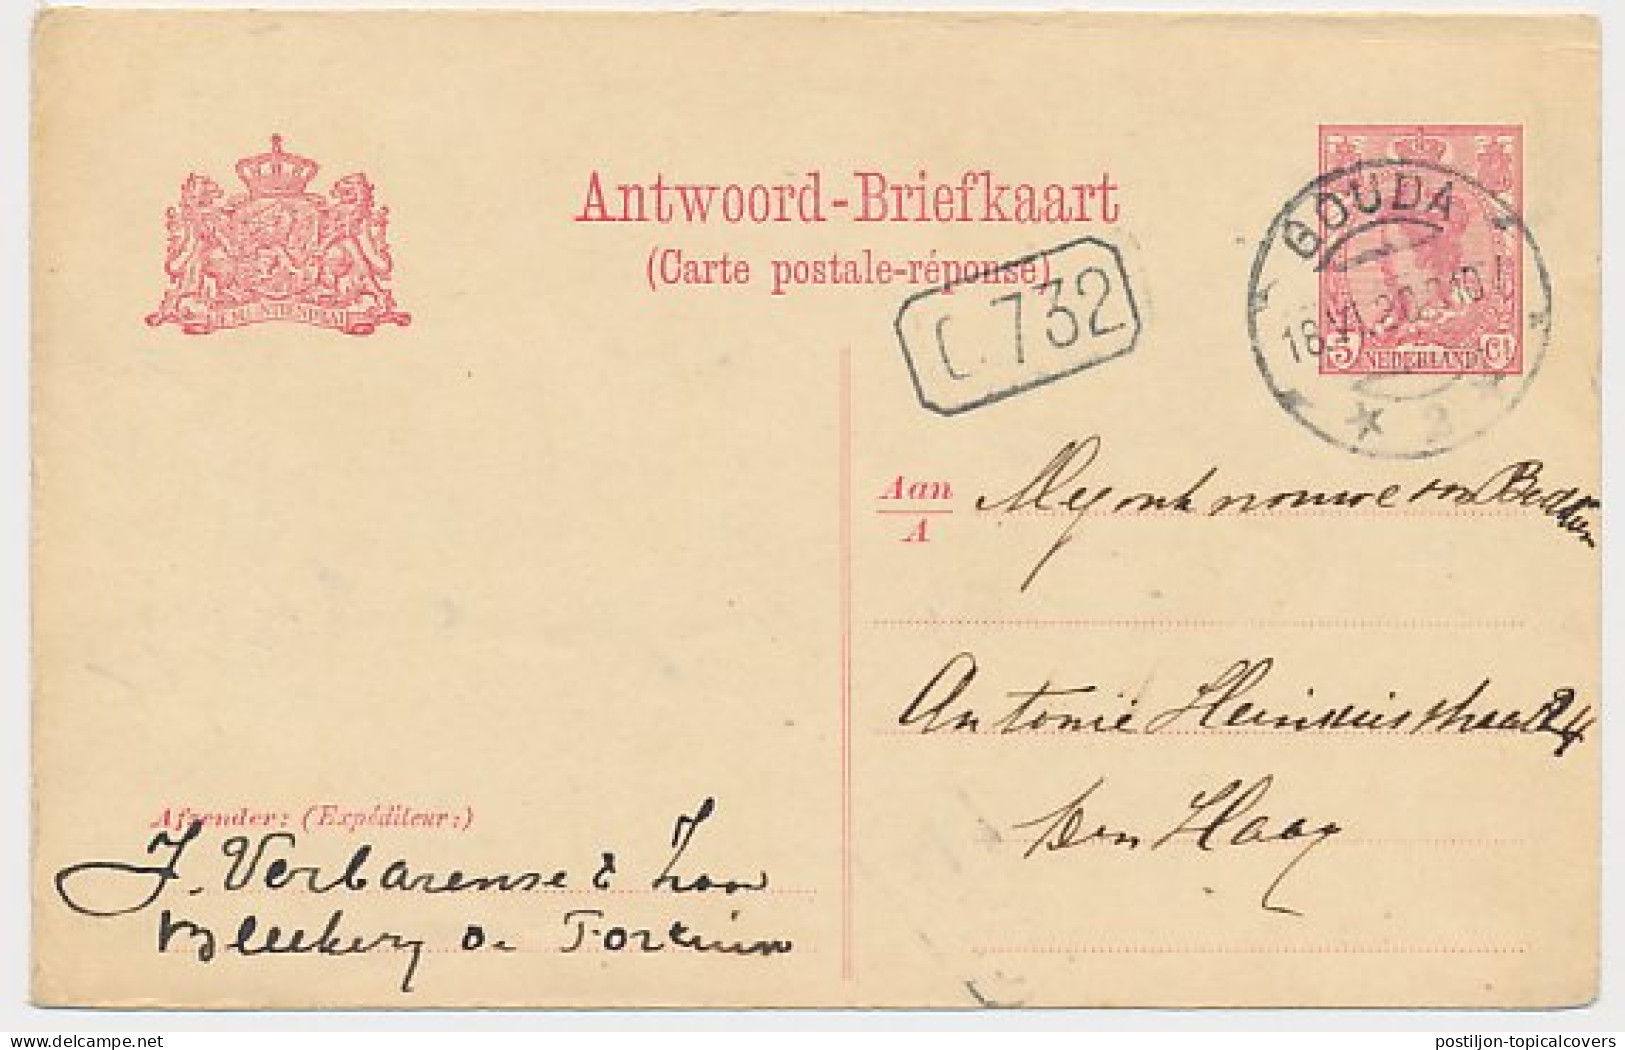 Briefkaart G. 105 A-krt. Gouda - S Gravenhage 1920 - Entiers Postaux